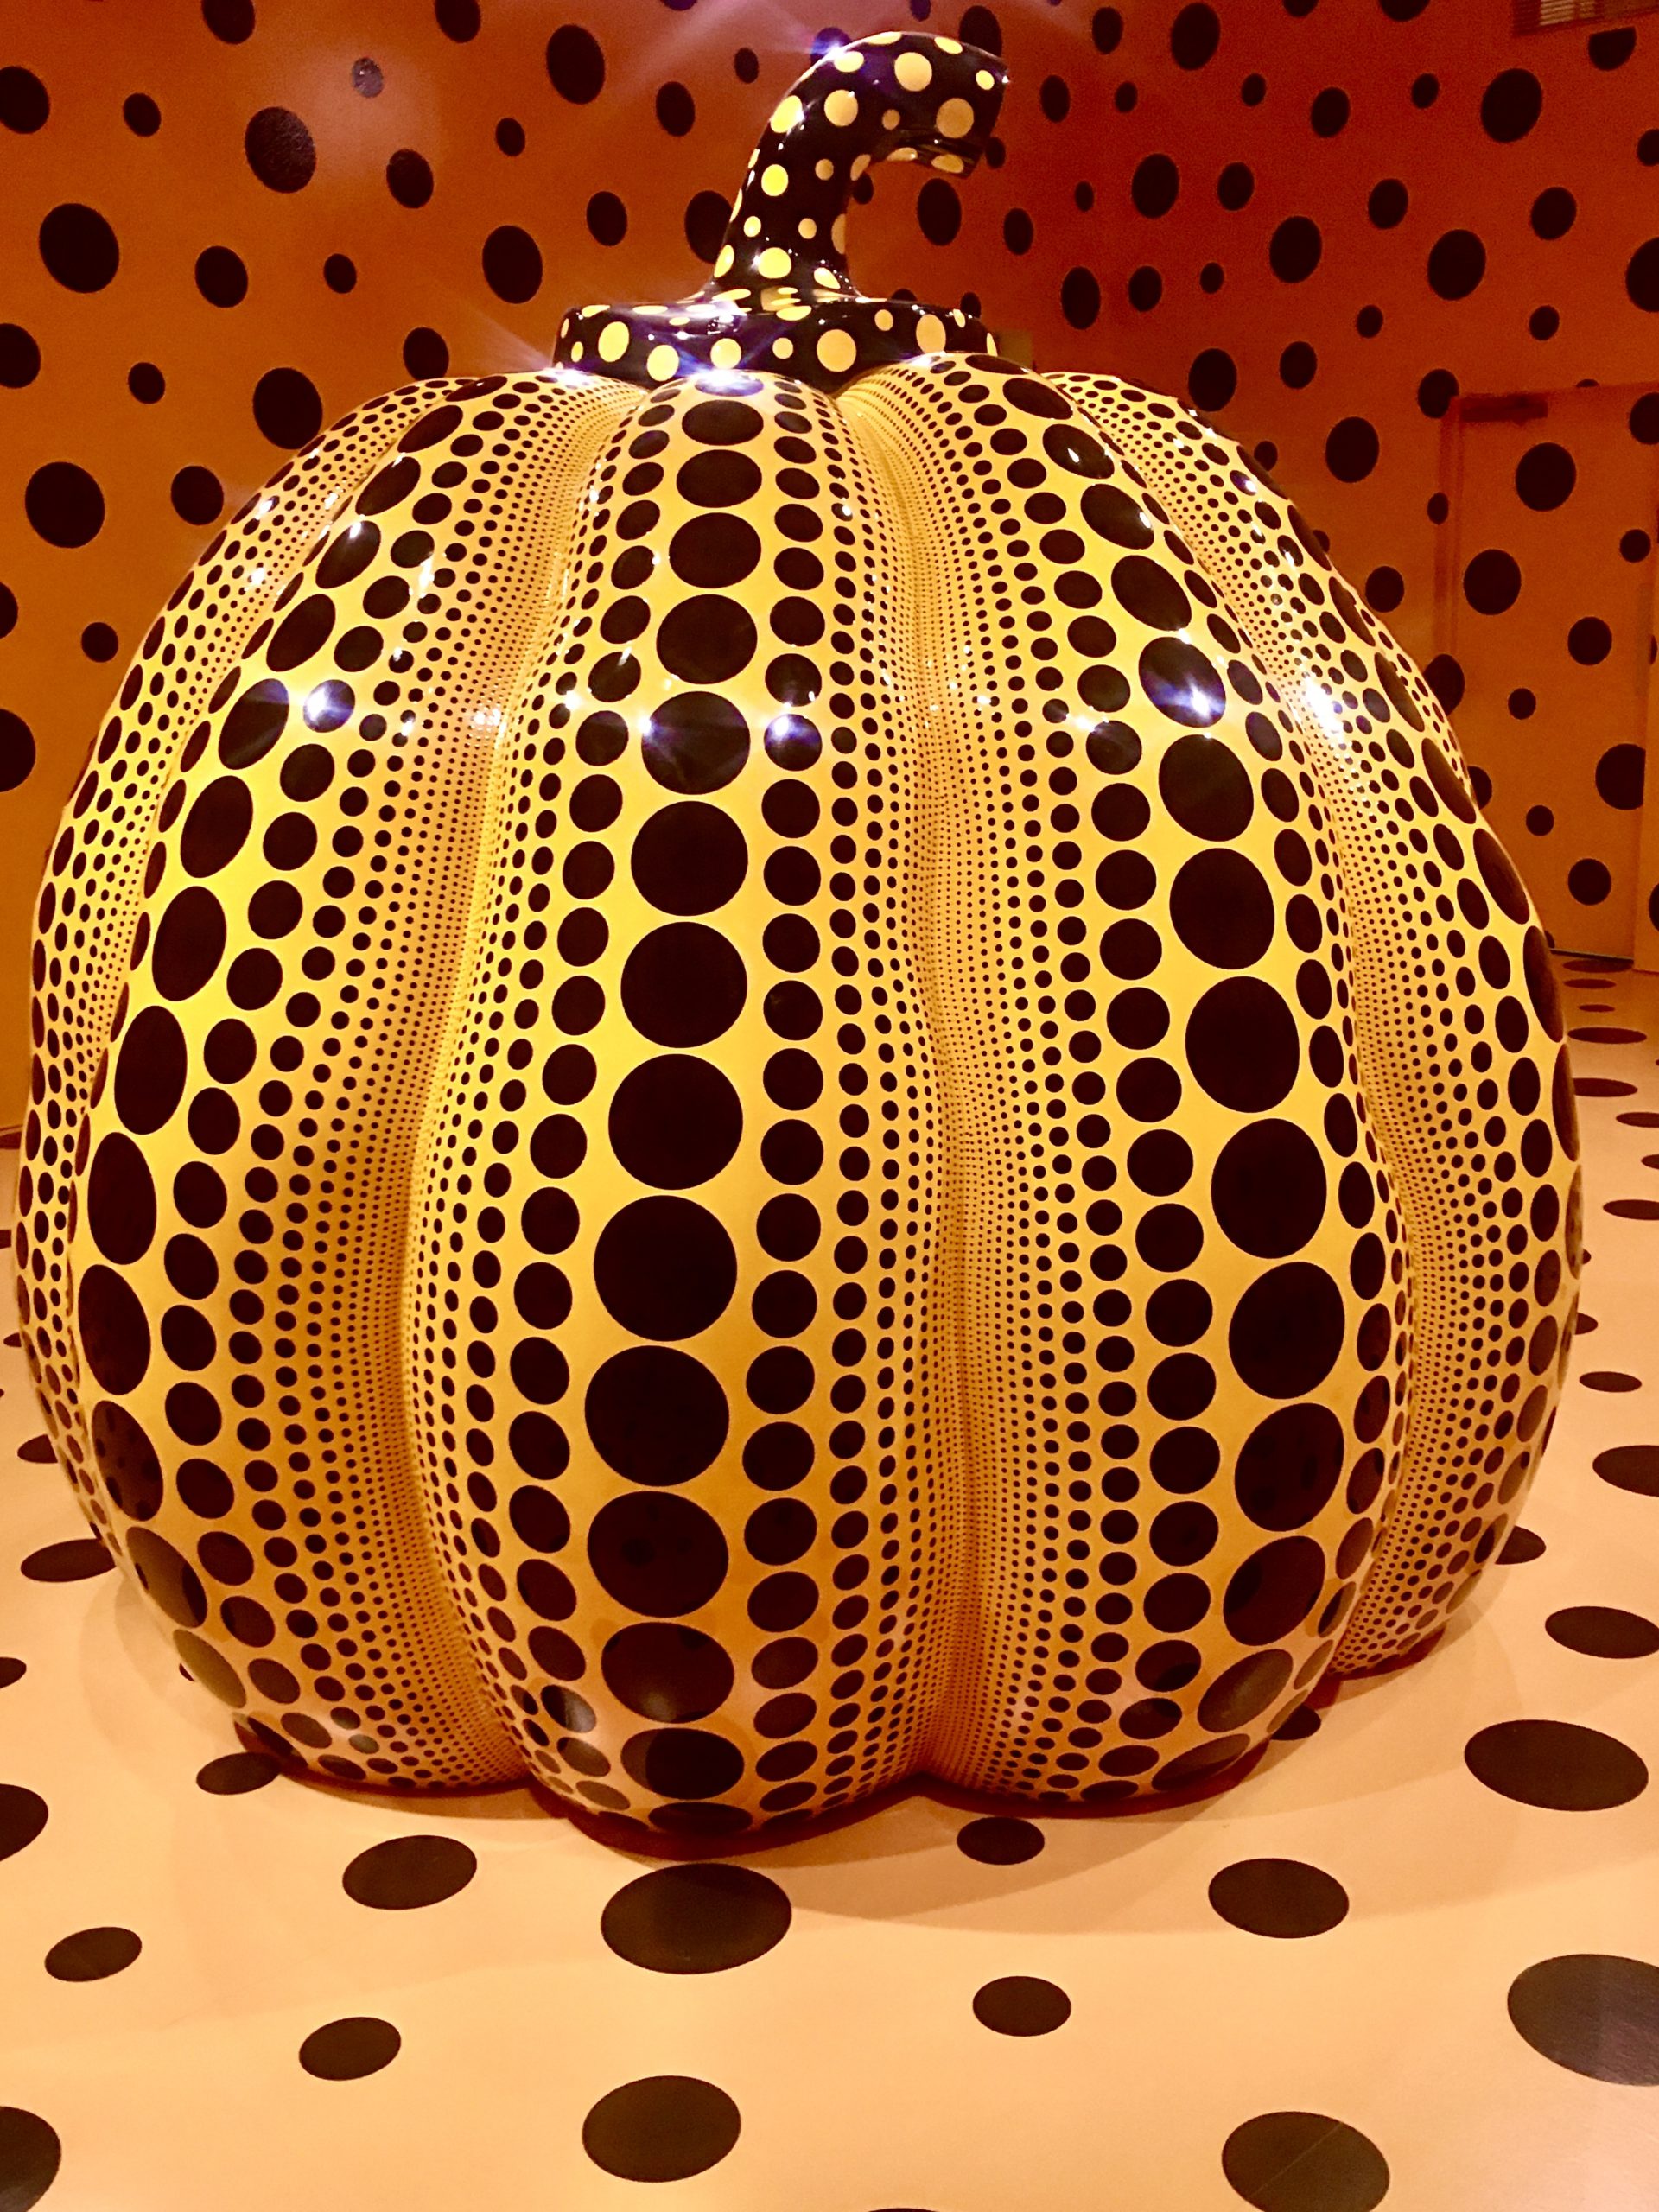 Hirshhorn Unveils Yayoi Kusama's Giant “Pumpkin” for Holiday